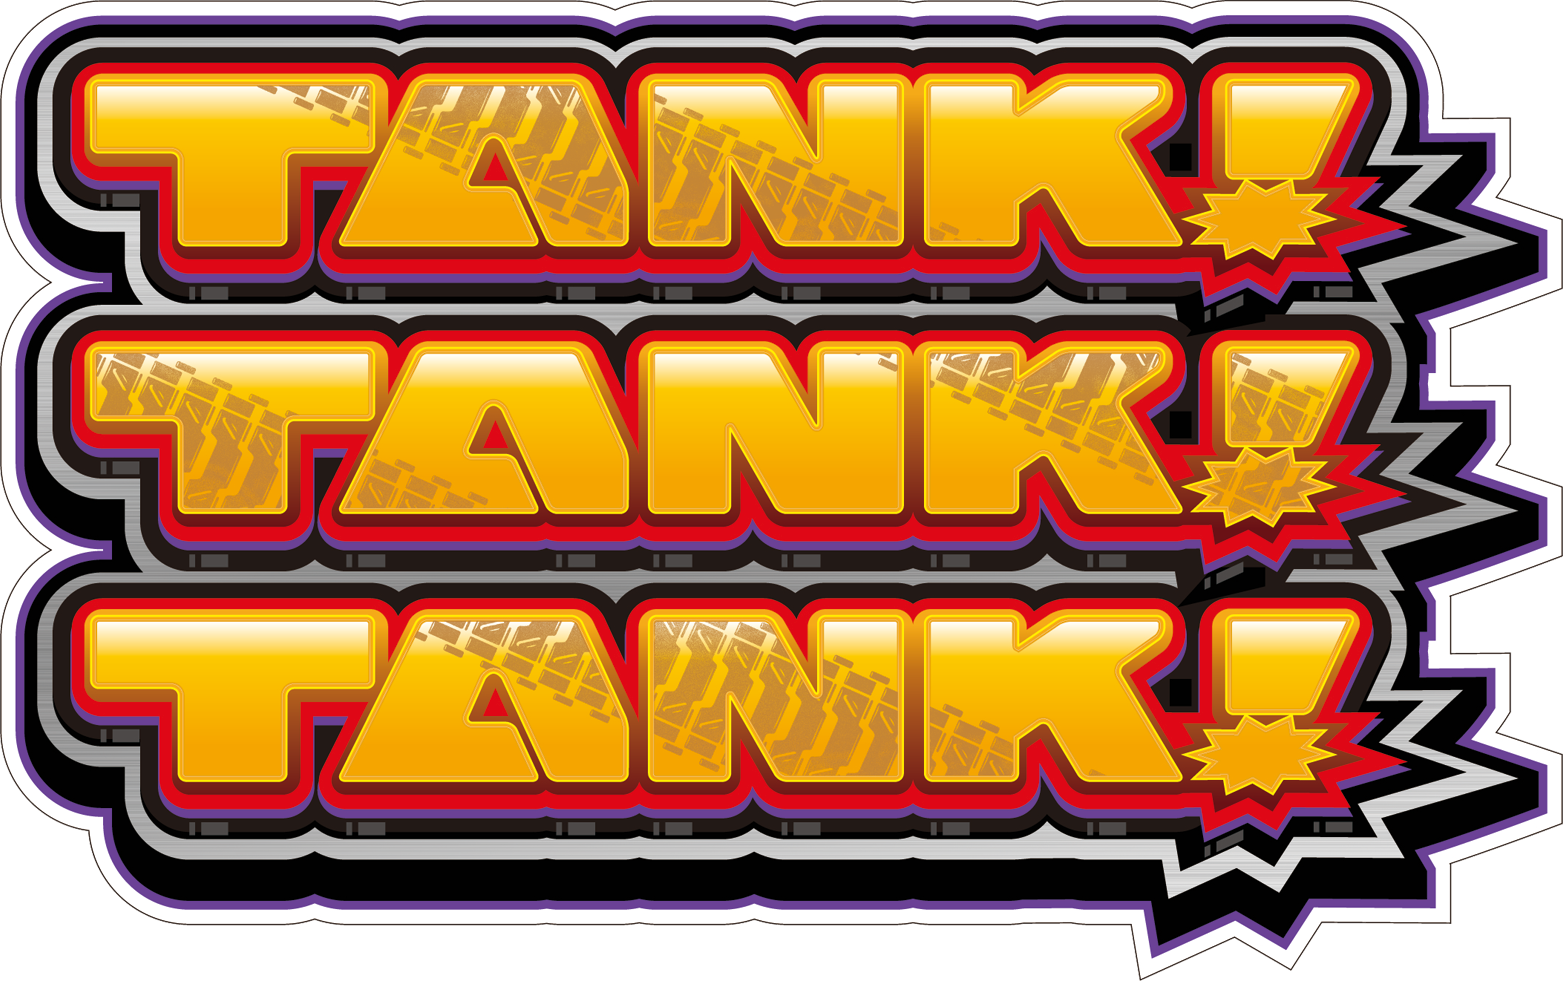 Tank! Tank! Tank! logo by RingoStarr39 on DeviantArt